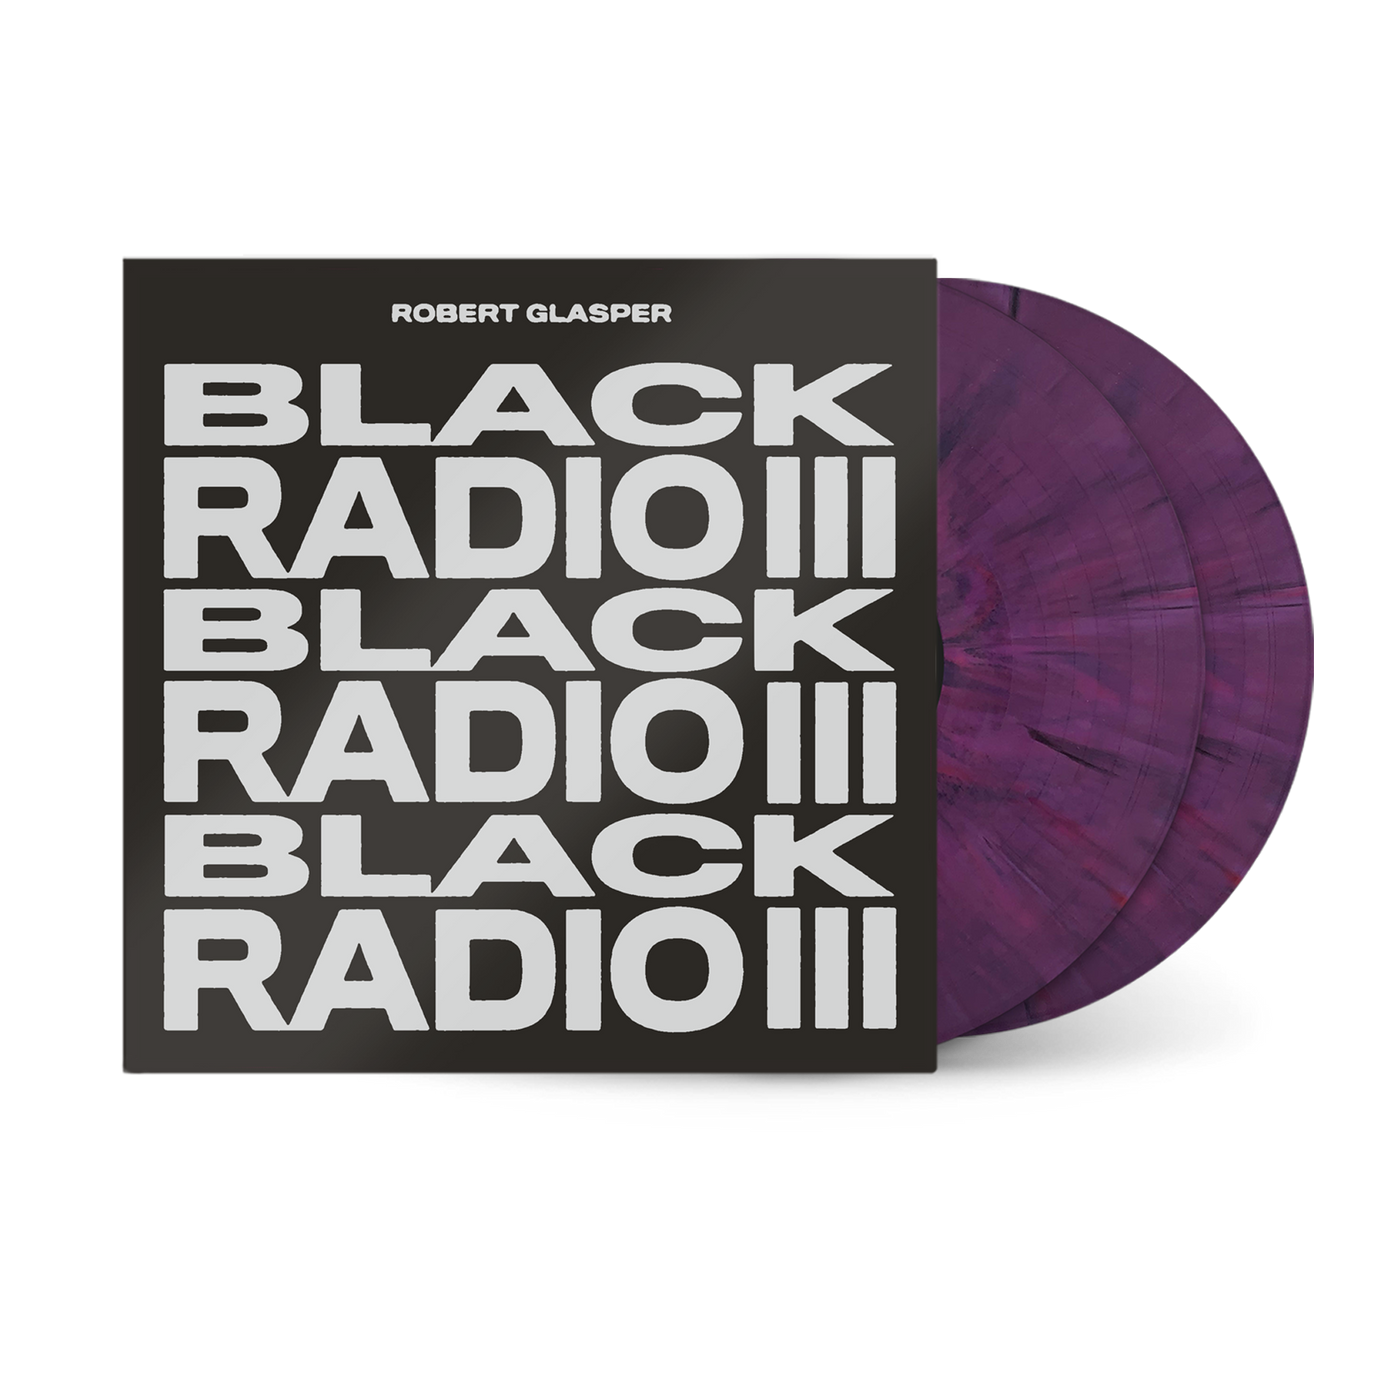 Black Radio III Limited Edition Grape Swirl 2xLP